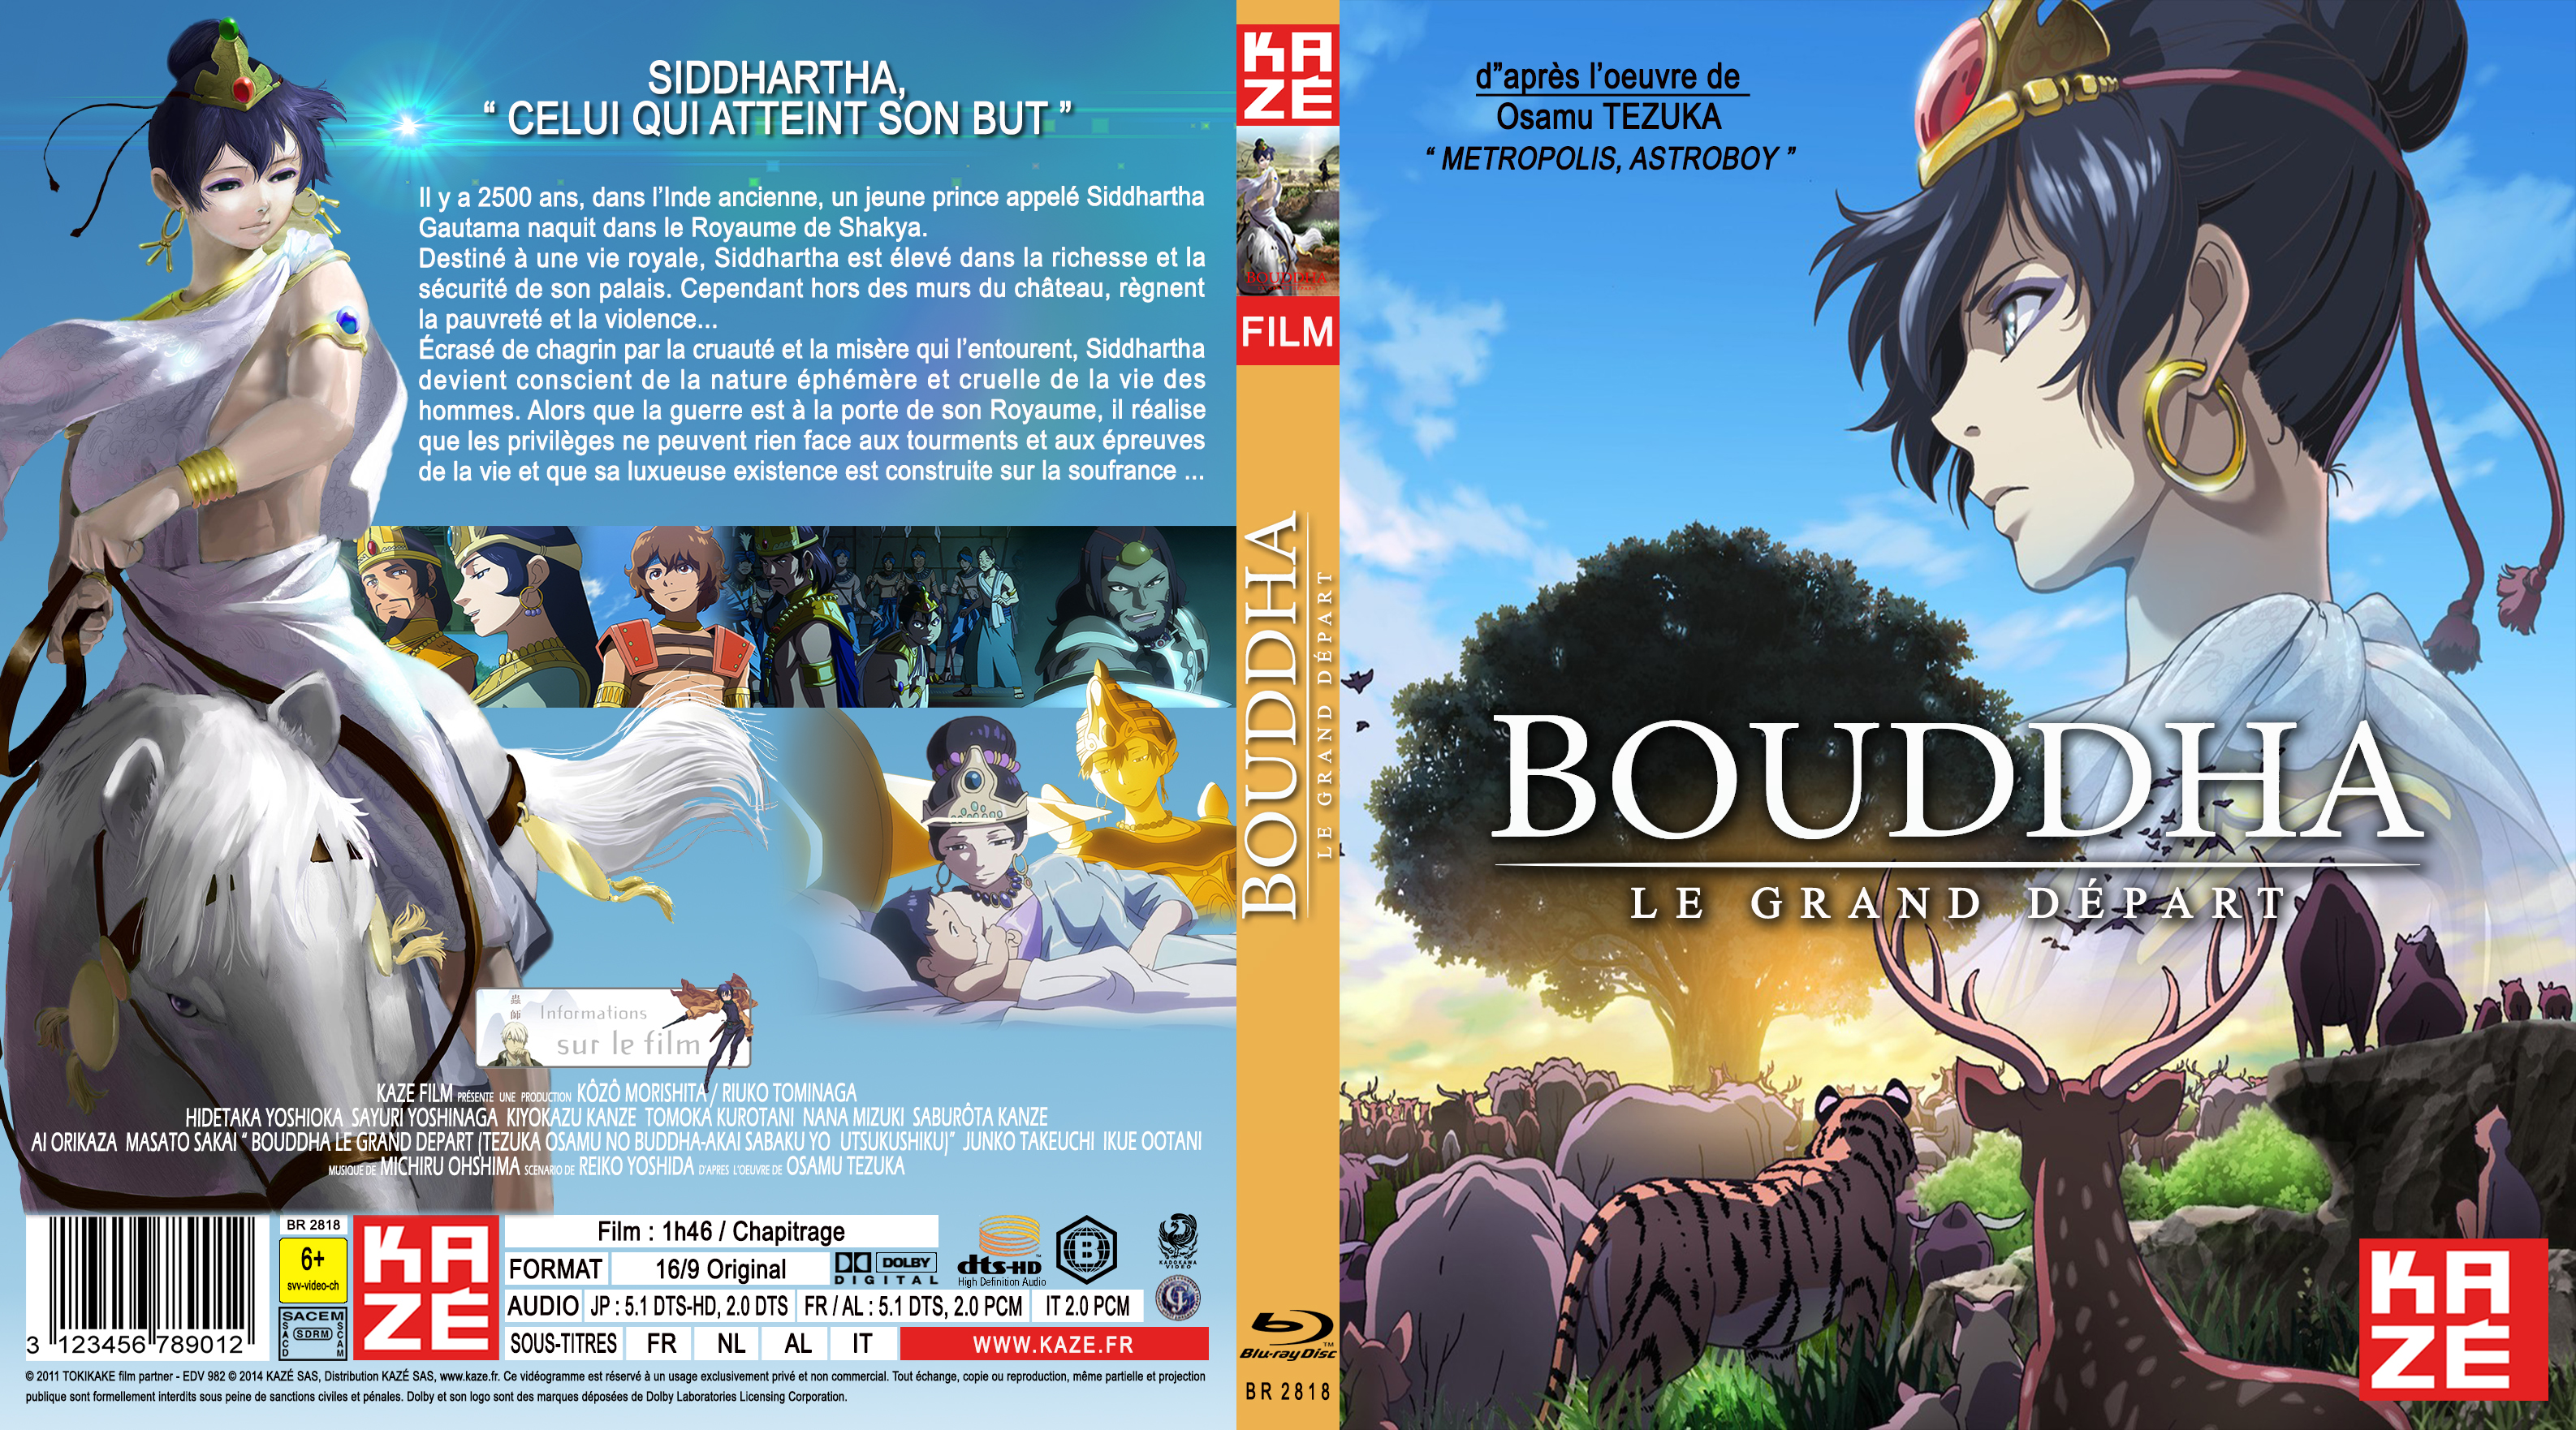 Jaquette DVD Bouddha custom (BLU-RAY)